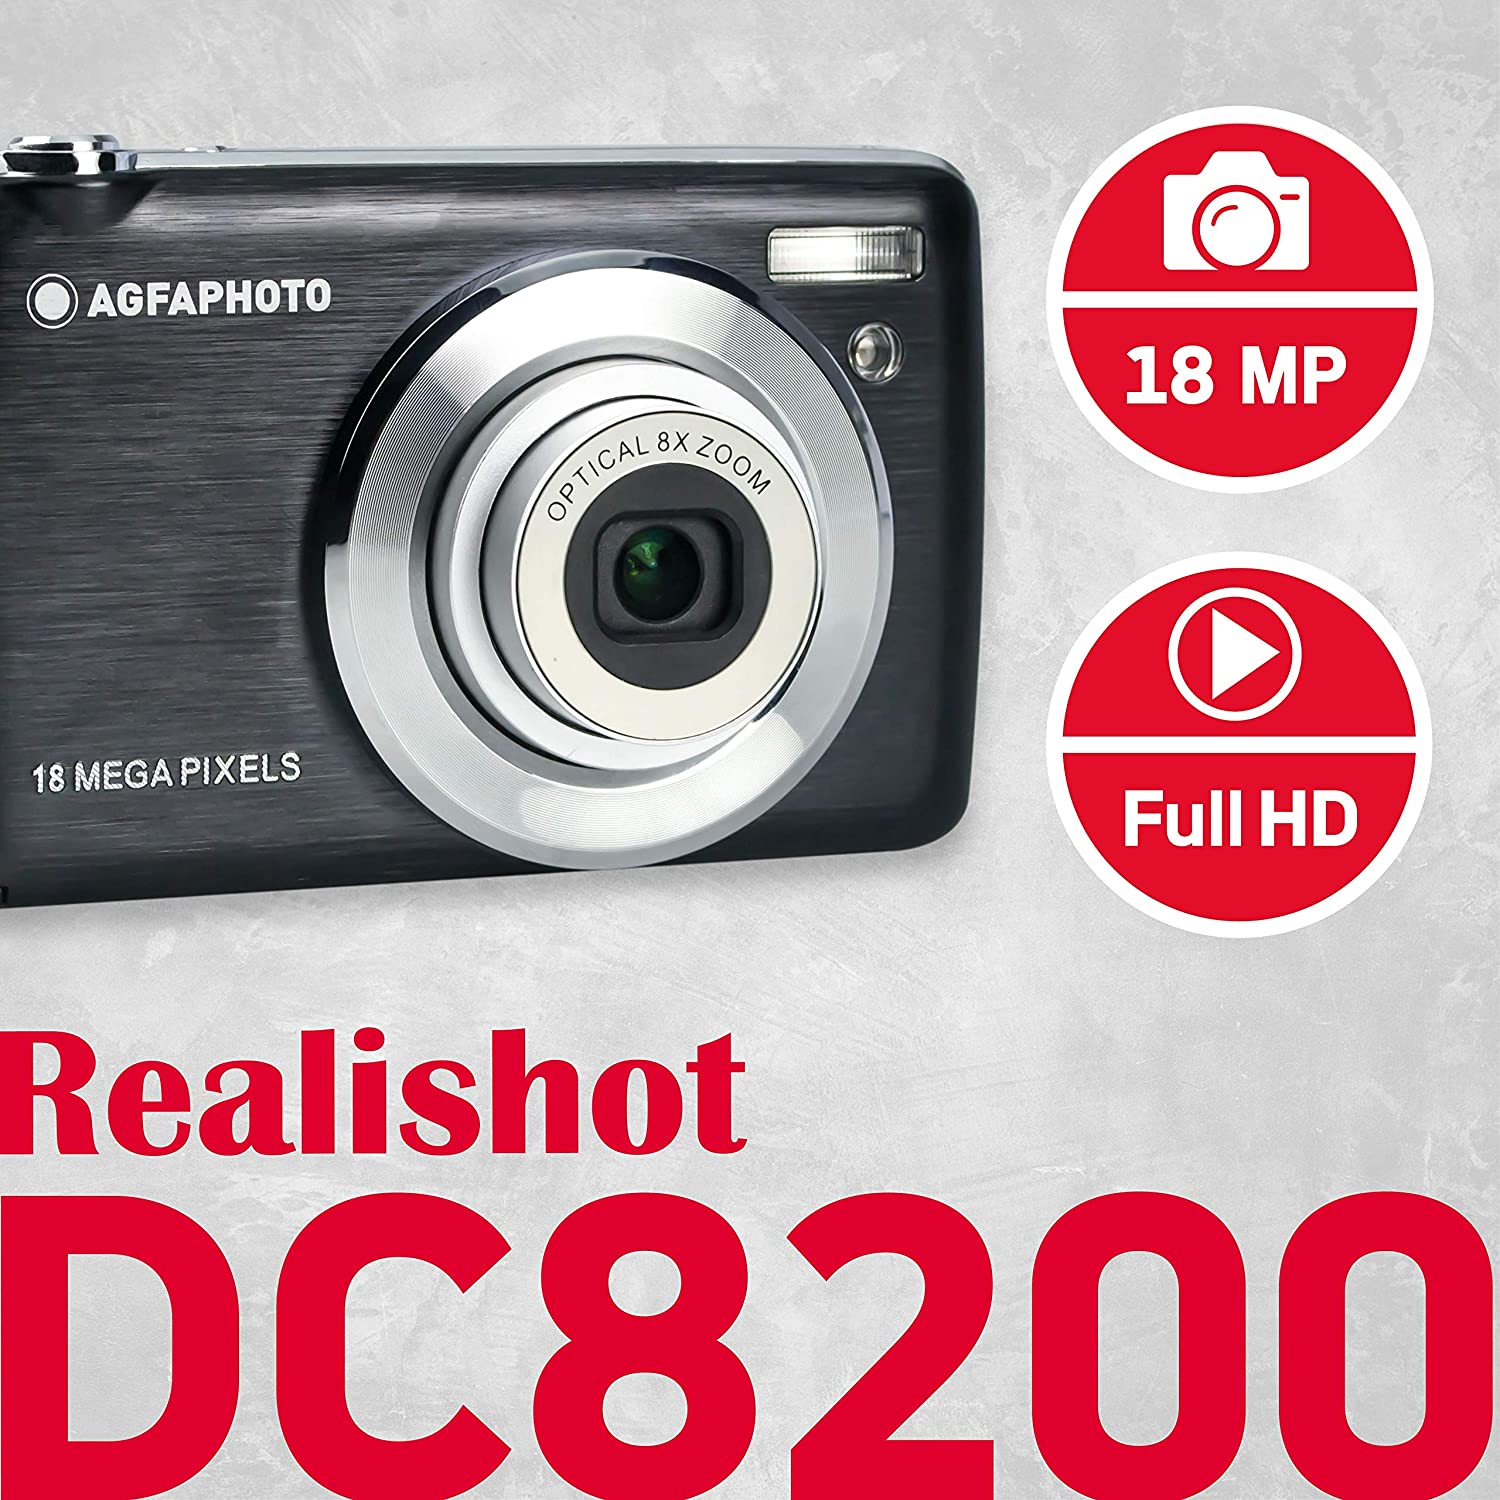 Agfa Photo Realishot DC8200 Compact Digital Camera - Black